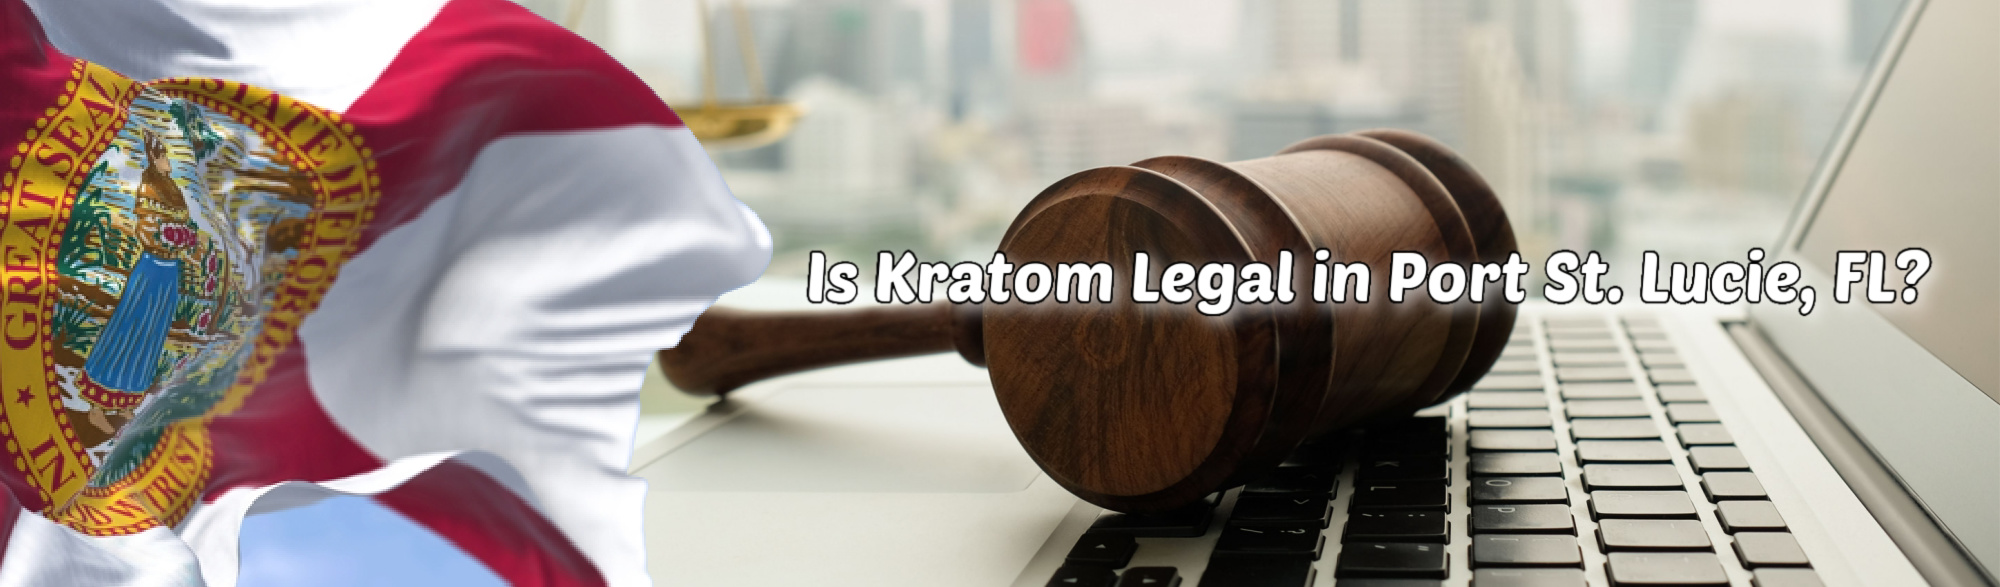 image of is kratom legal in st lucie fl